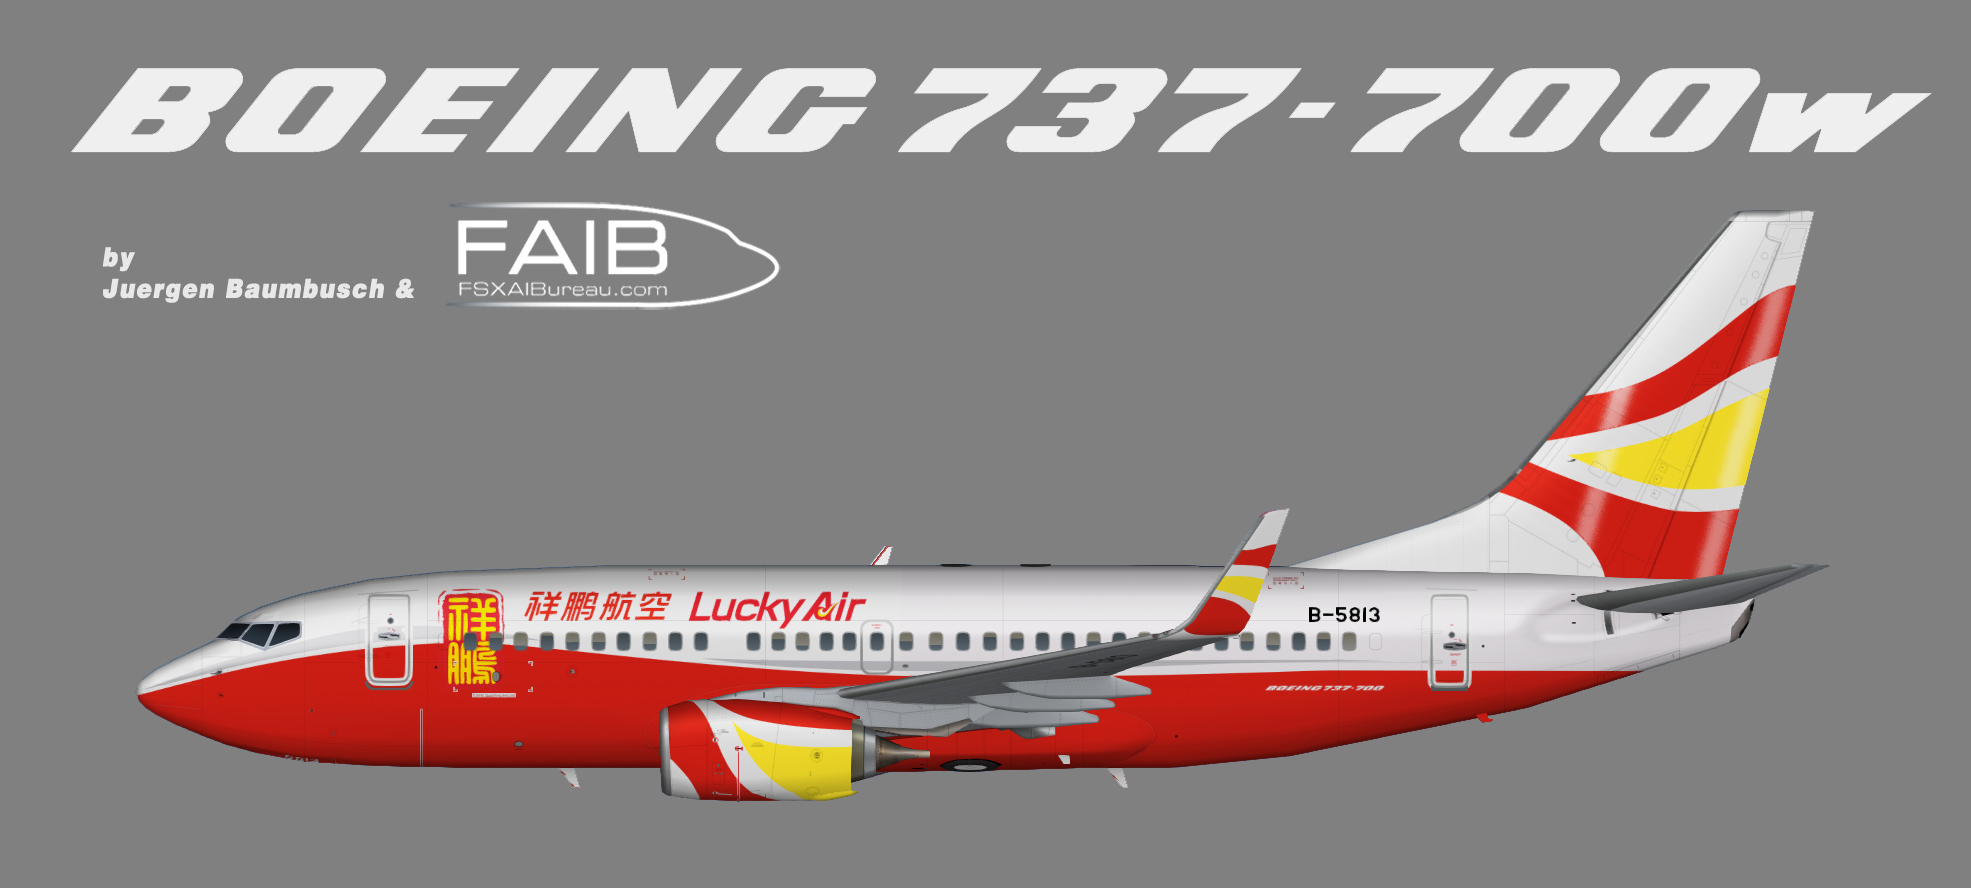 Lucky Air Boeing 737-700w